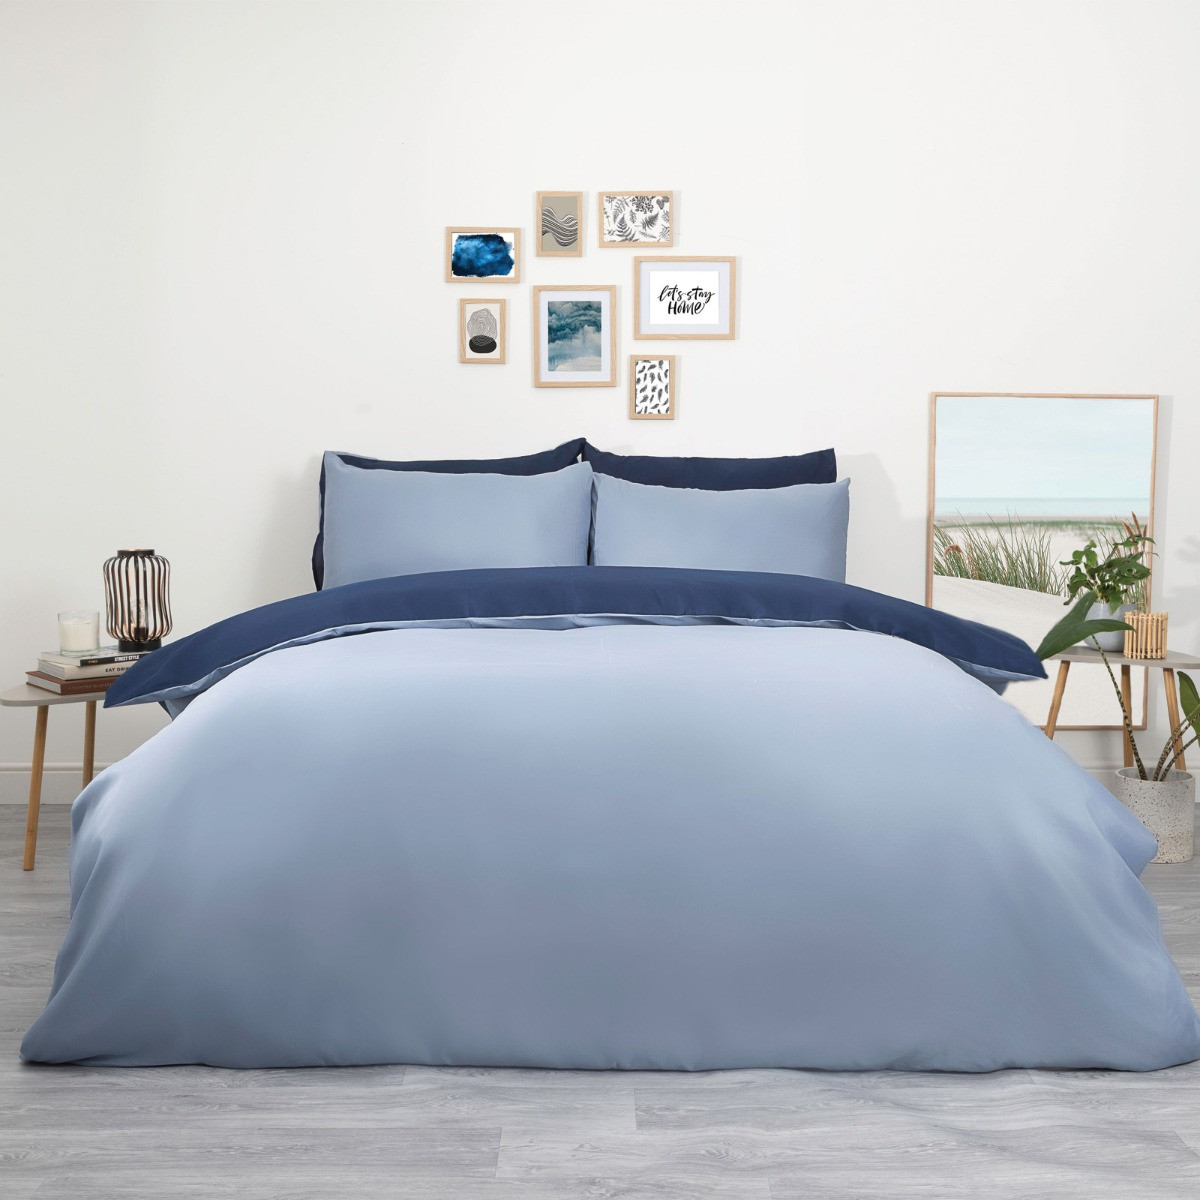 Brentfords Plain Dyed Duvet Cover Quilt Bedding Set With Pillowcase Navy Blue Double>